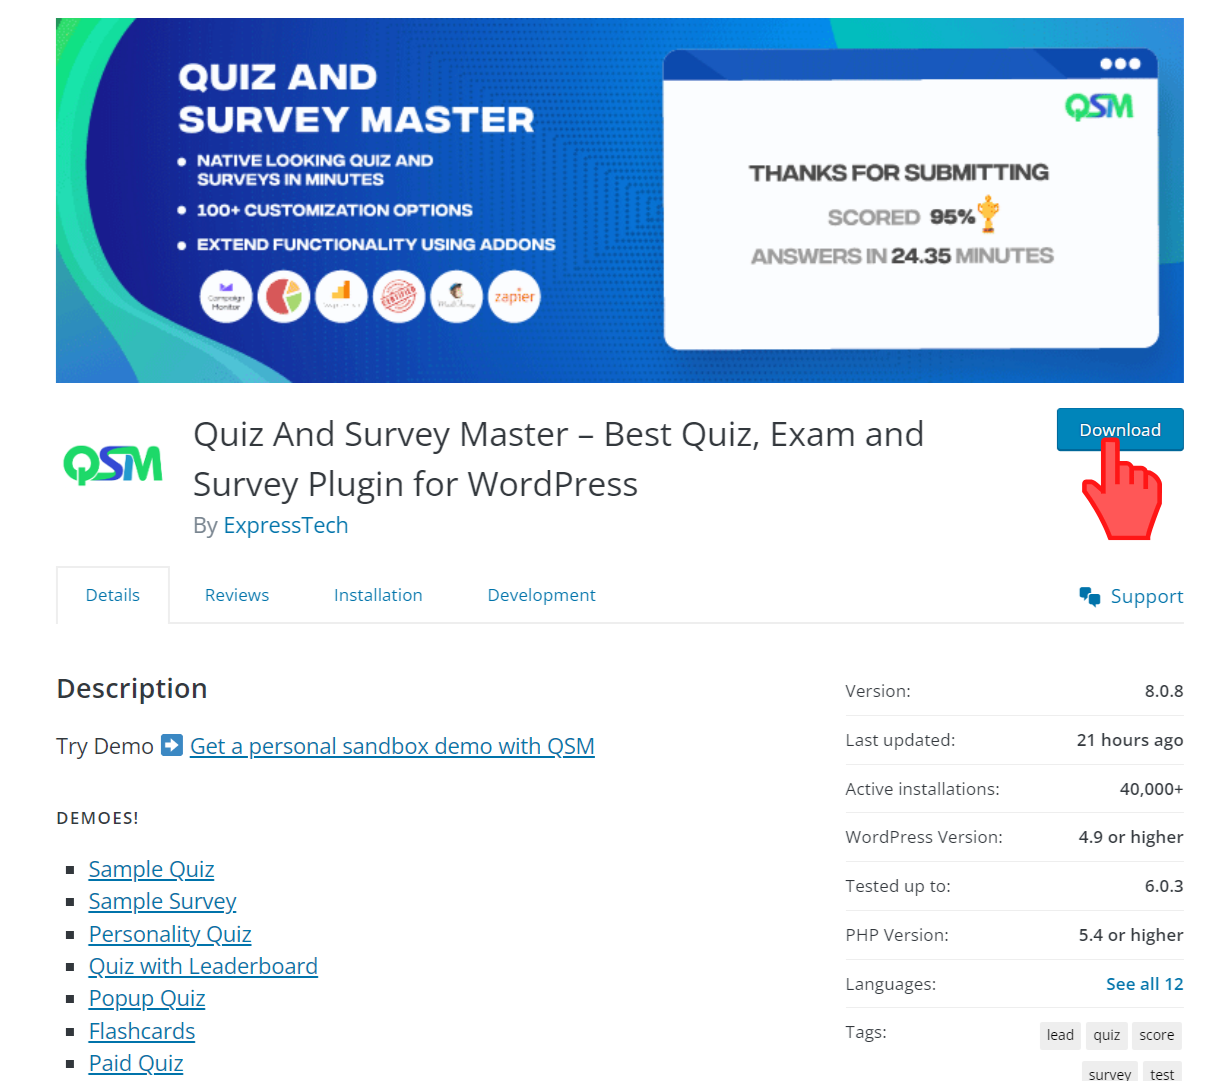 How to create a WordPress Quiz using QSM- Installing the QSM Plugin